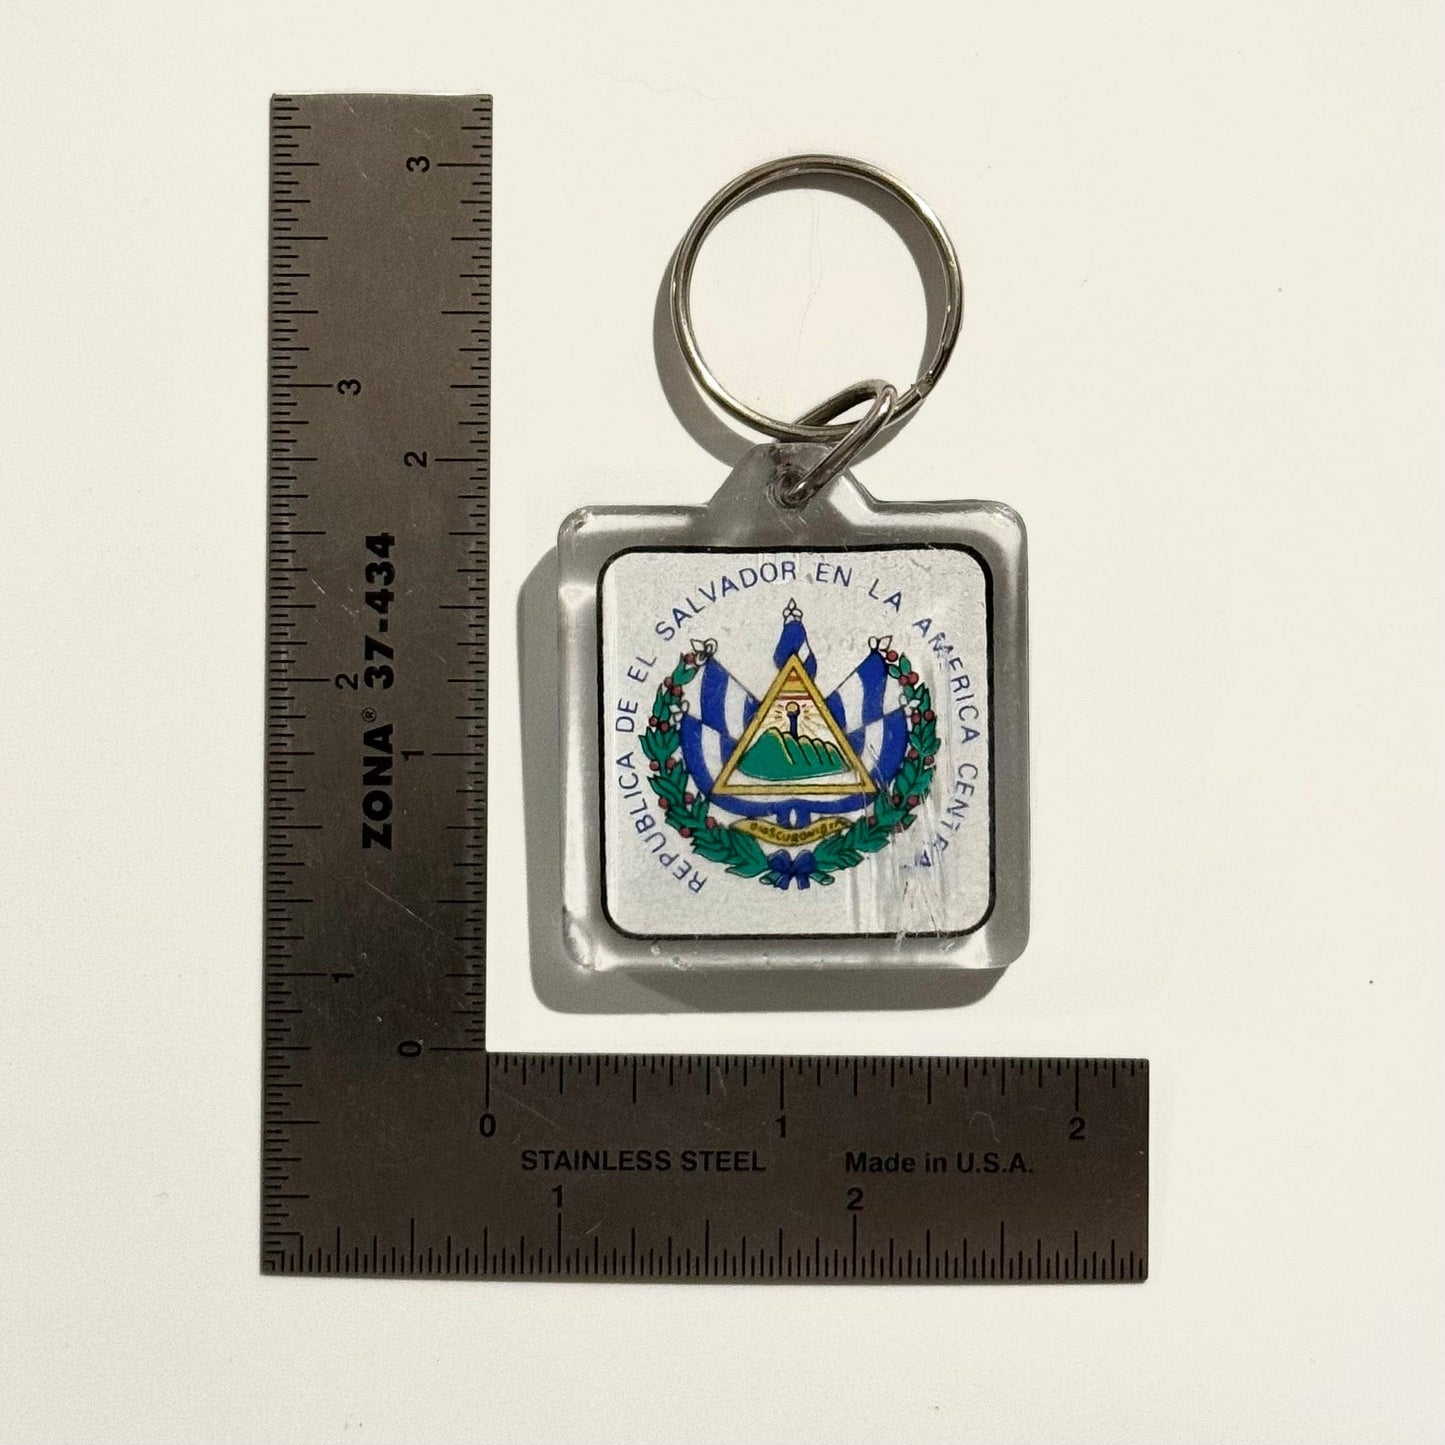 El Salvador Travel Souvenir Keychain Key Ring Square Clear Acrylic